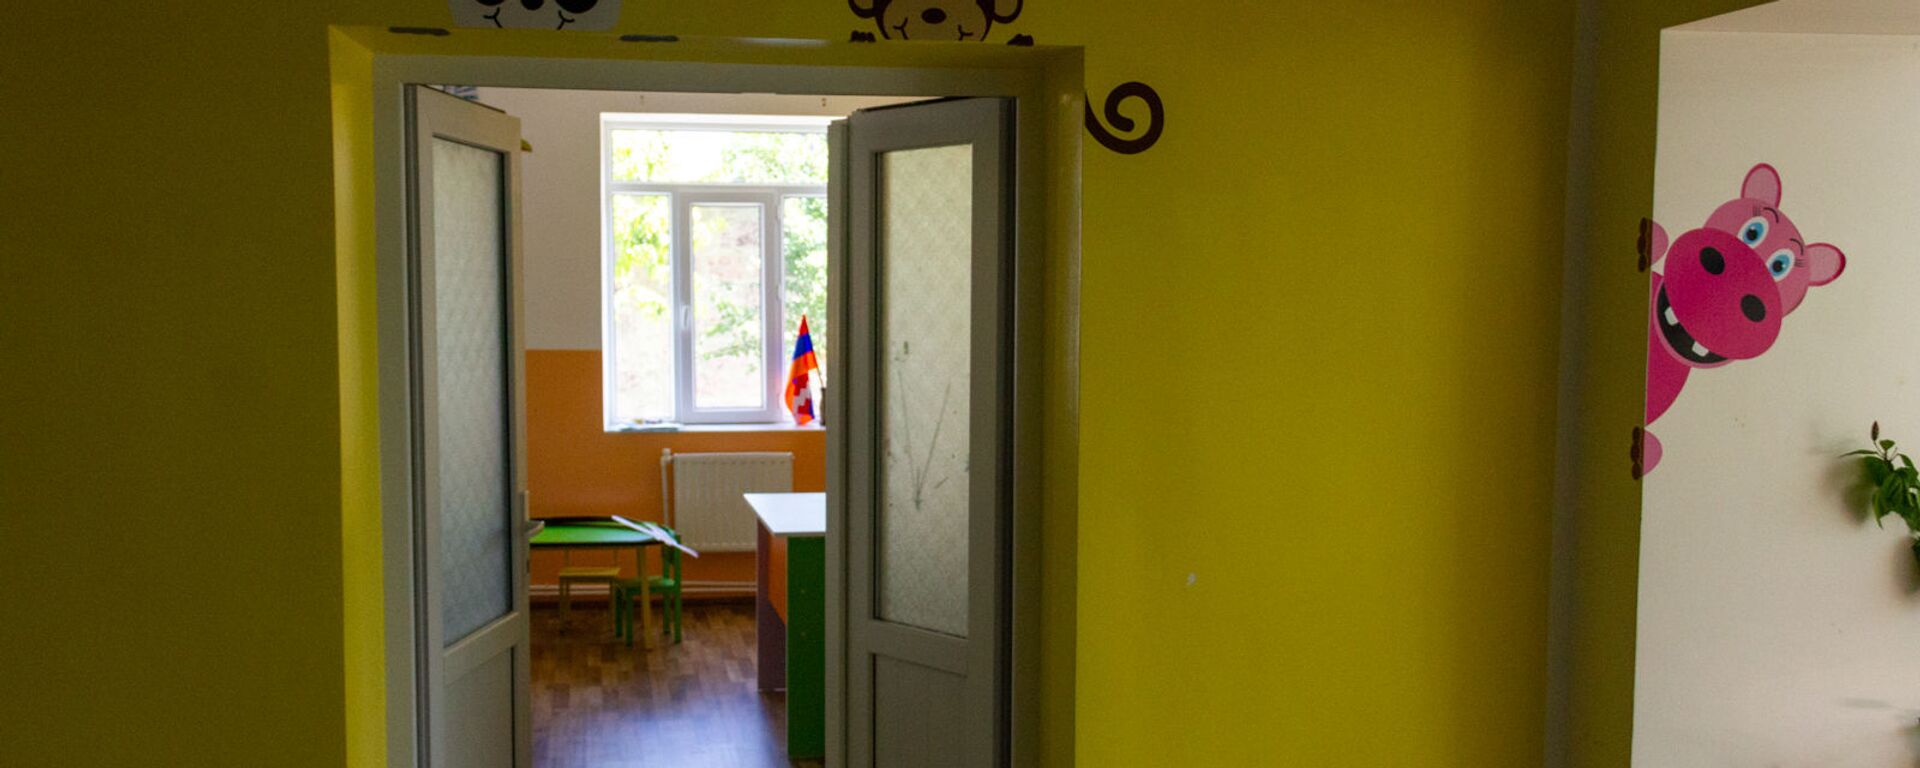 Детский сад общины Айгепар Тавушской области - Sputnik Արմենիա, 1920, 06.05.2021